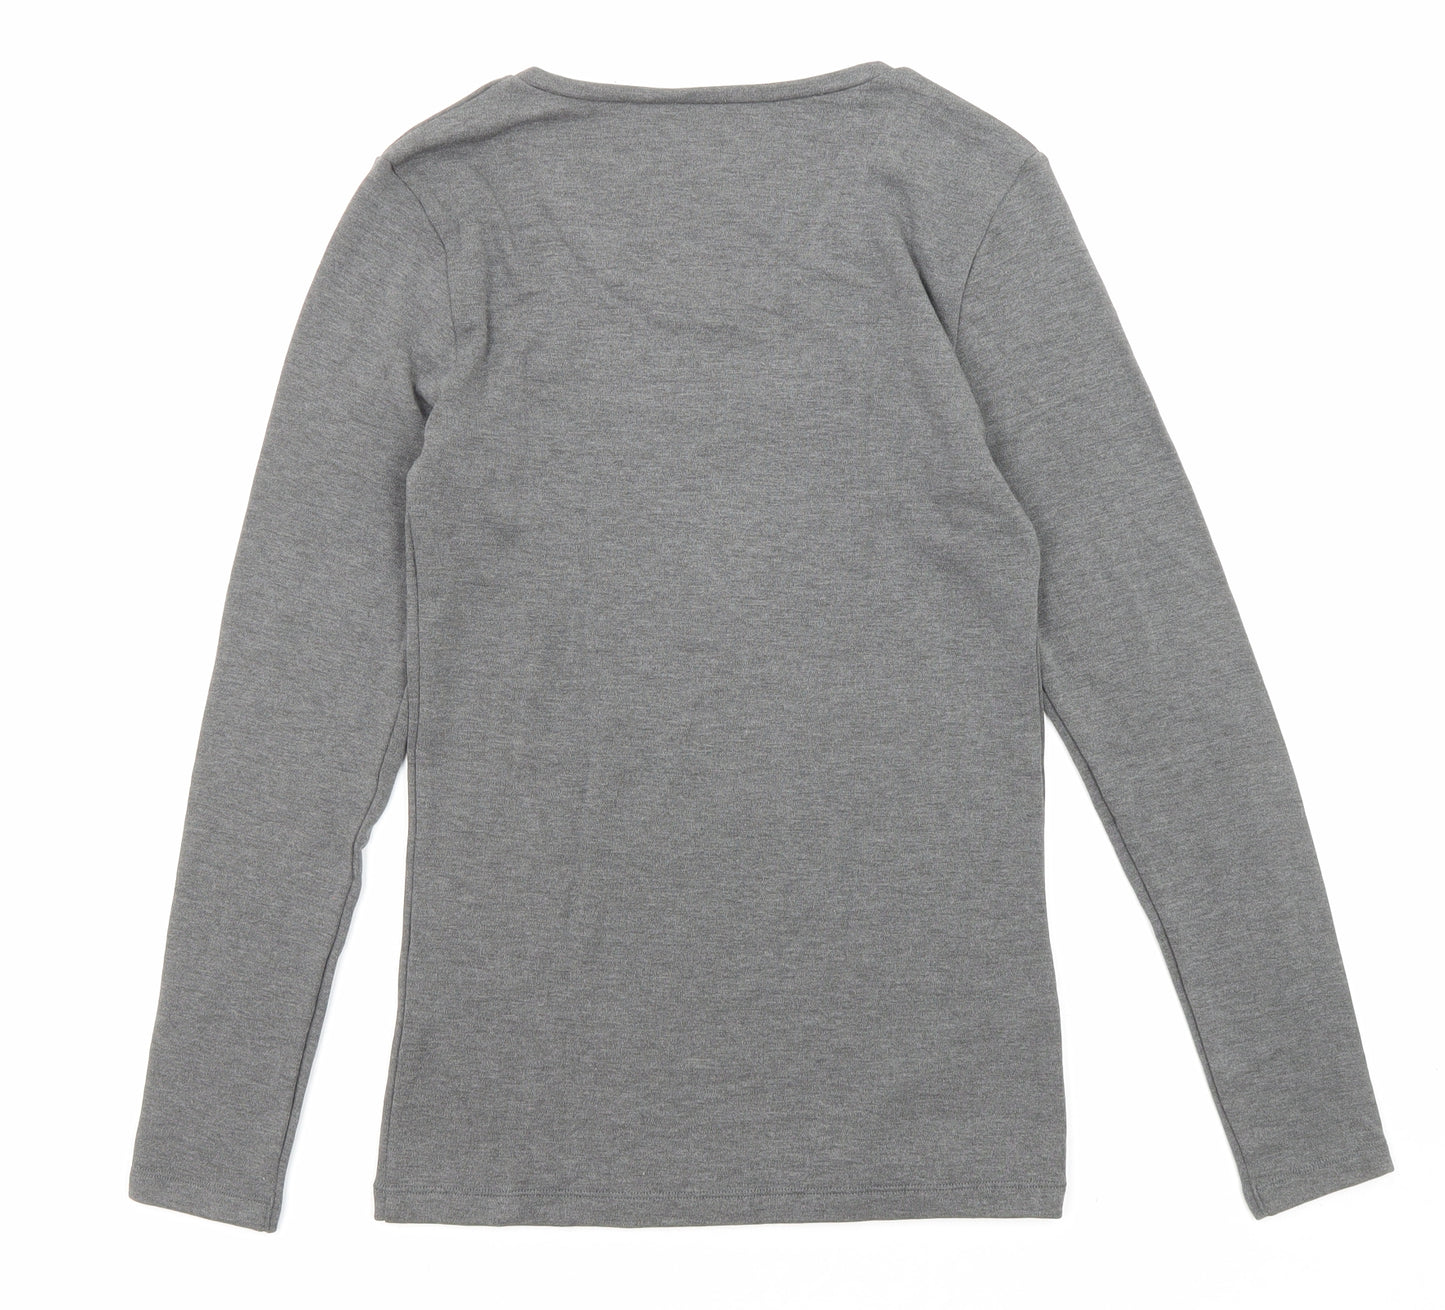 Marks and Spencer Womens Grey Herringbone Acrylic Basic T-Shirt Size 12 Round Neck - Thermal